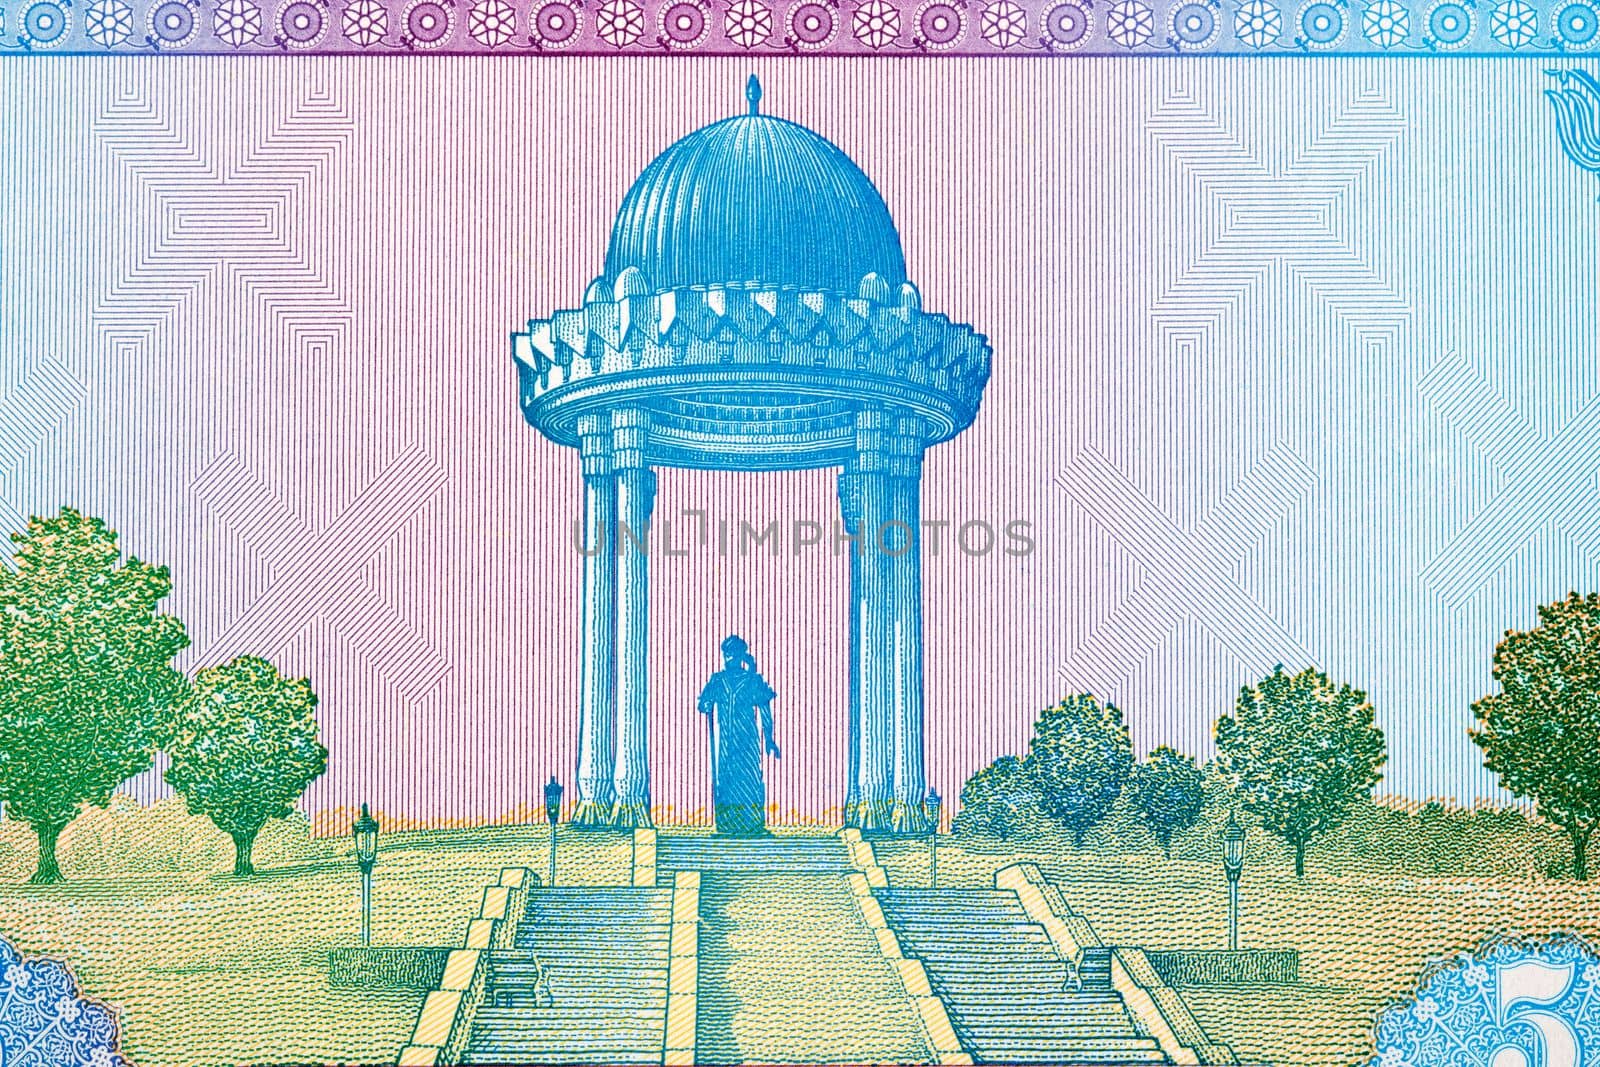 Alisher Navoi Monument in Tashkent from Uzbekistani money - sum